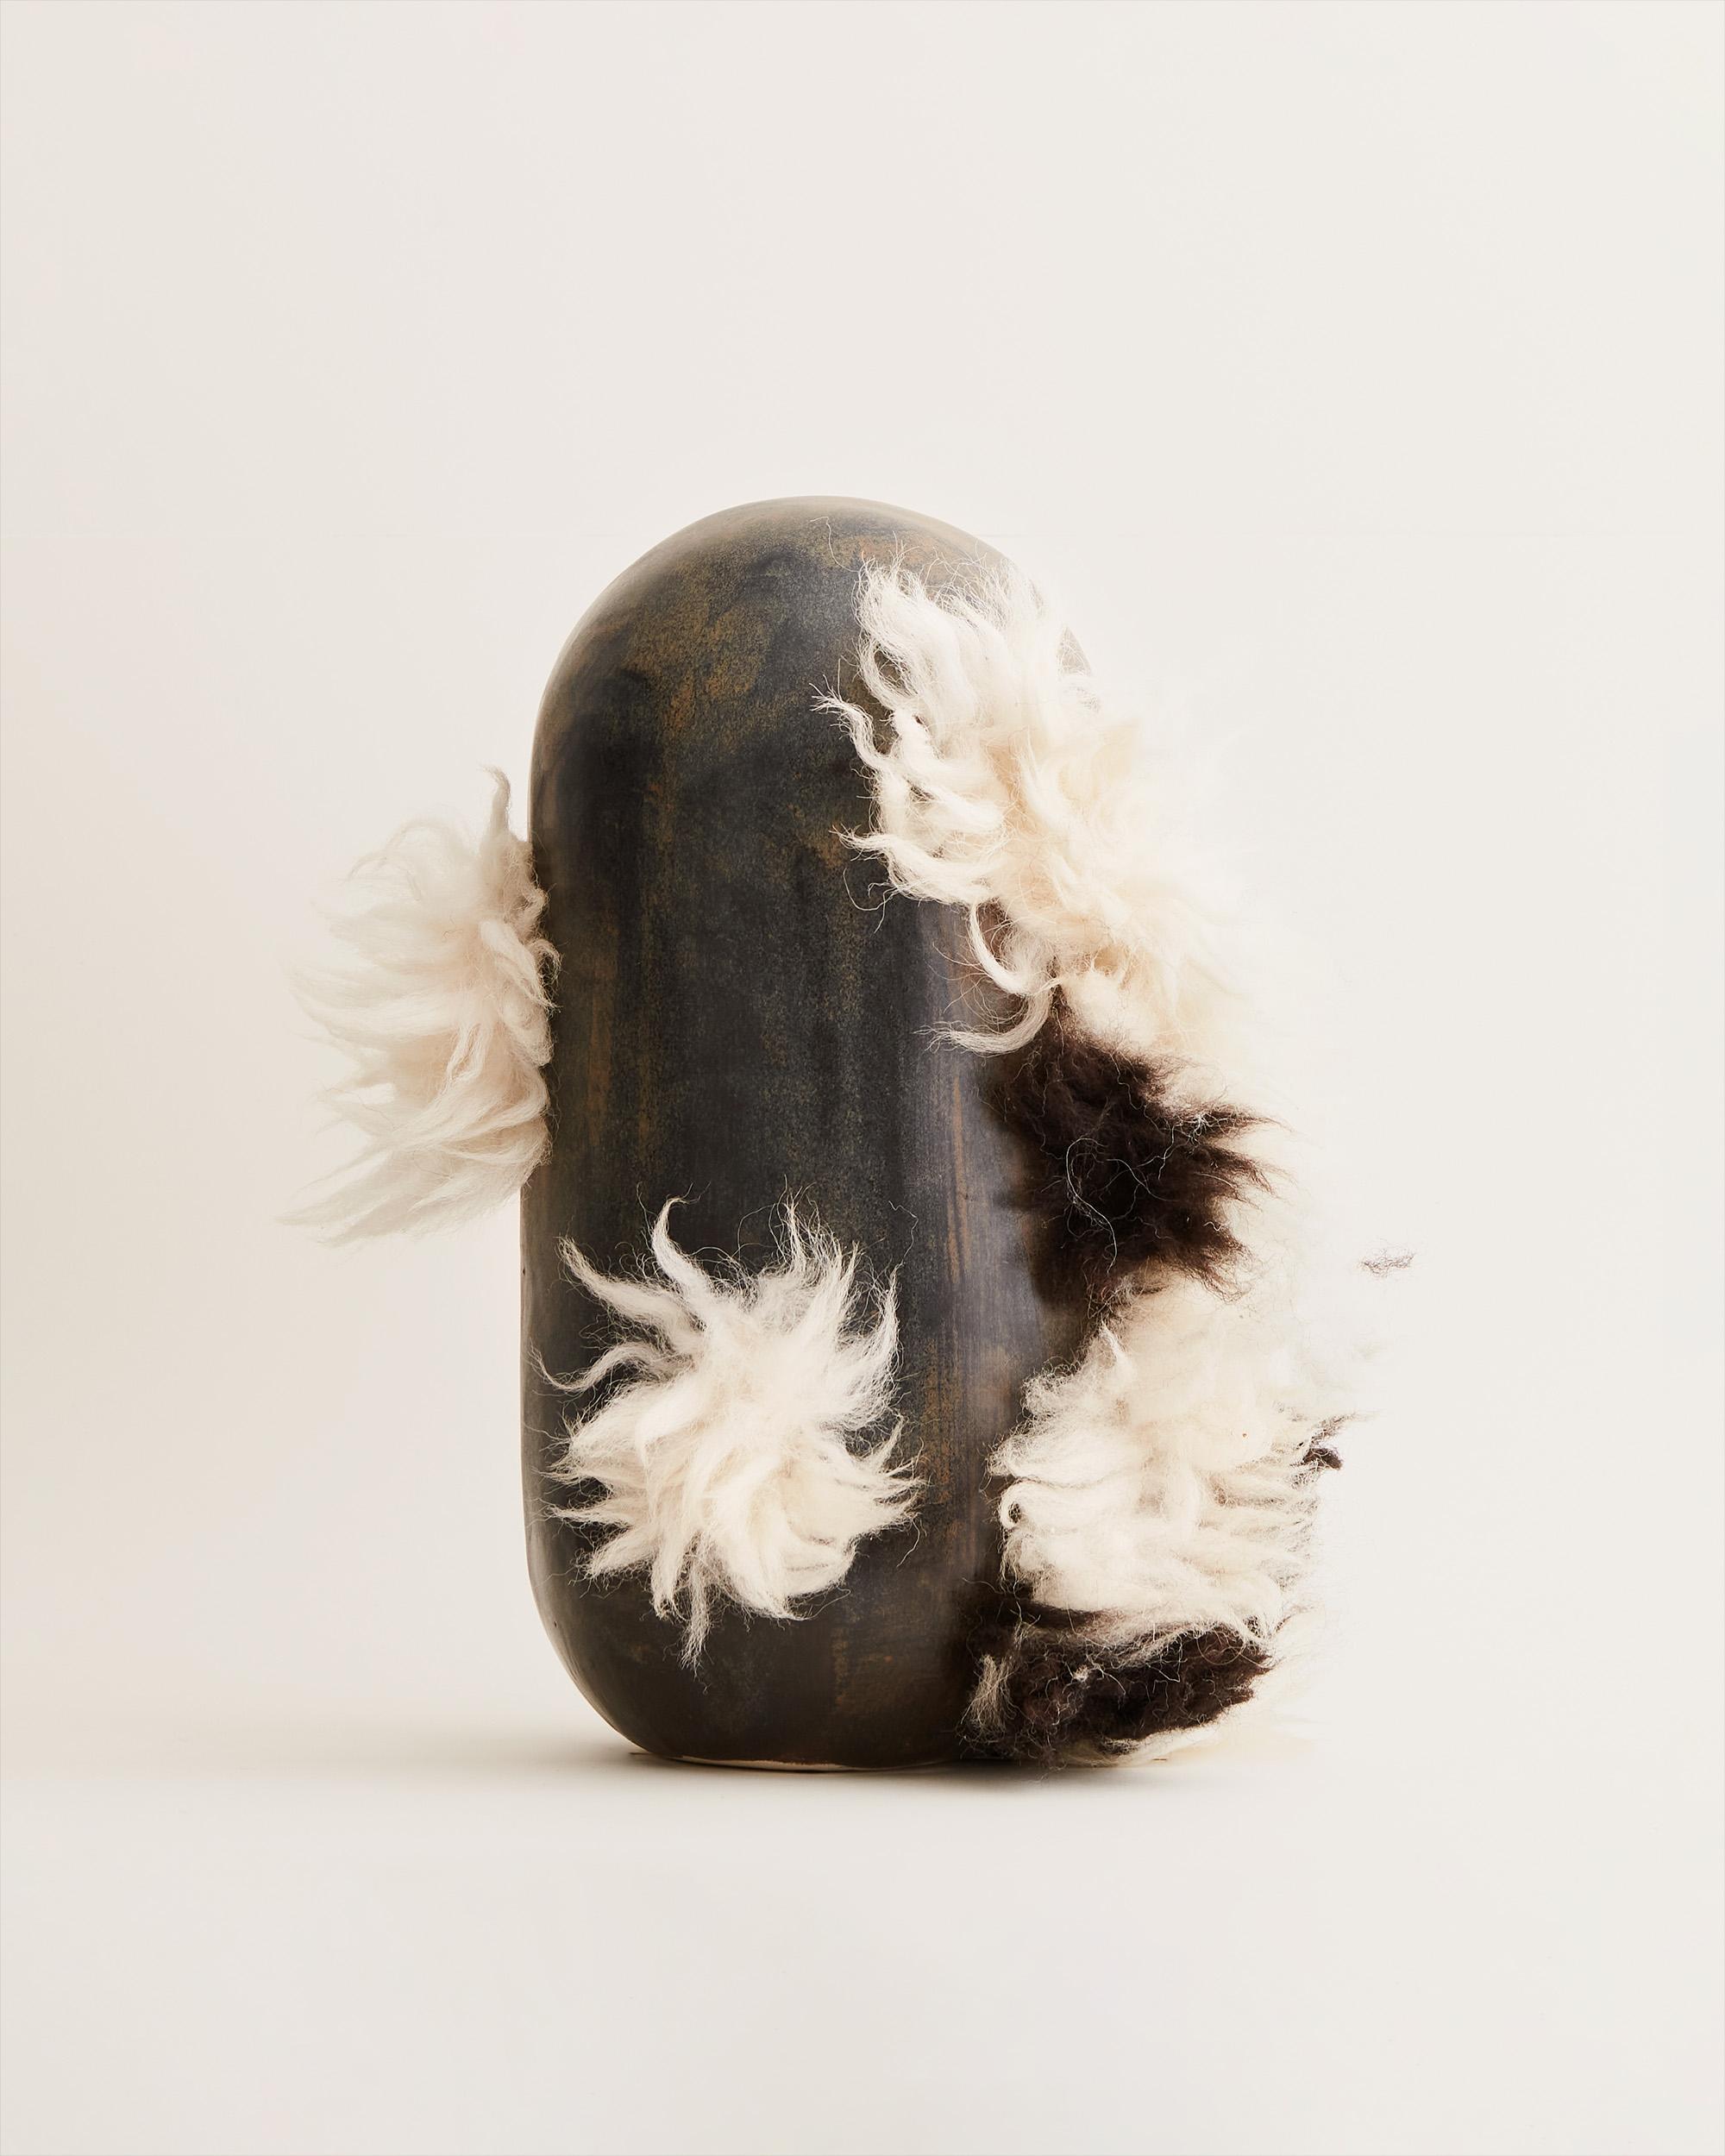 Angélique de Chabot Abstract Sculpture - Momo Tetis - Contemporary Abstract Ceramic with fur sculpture